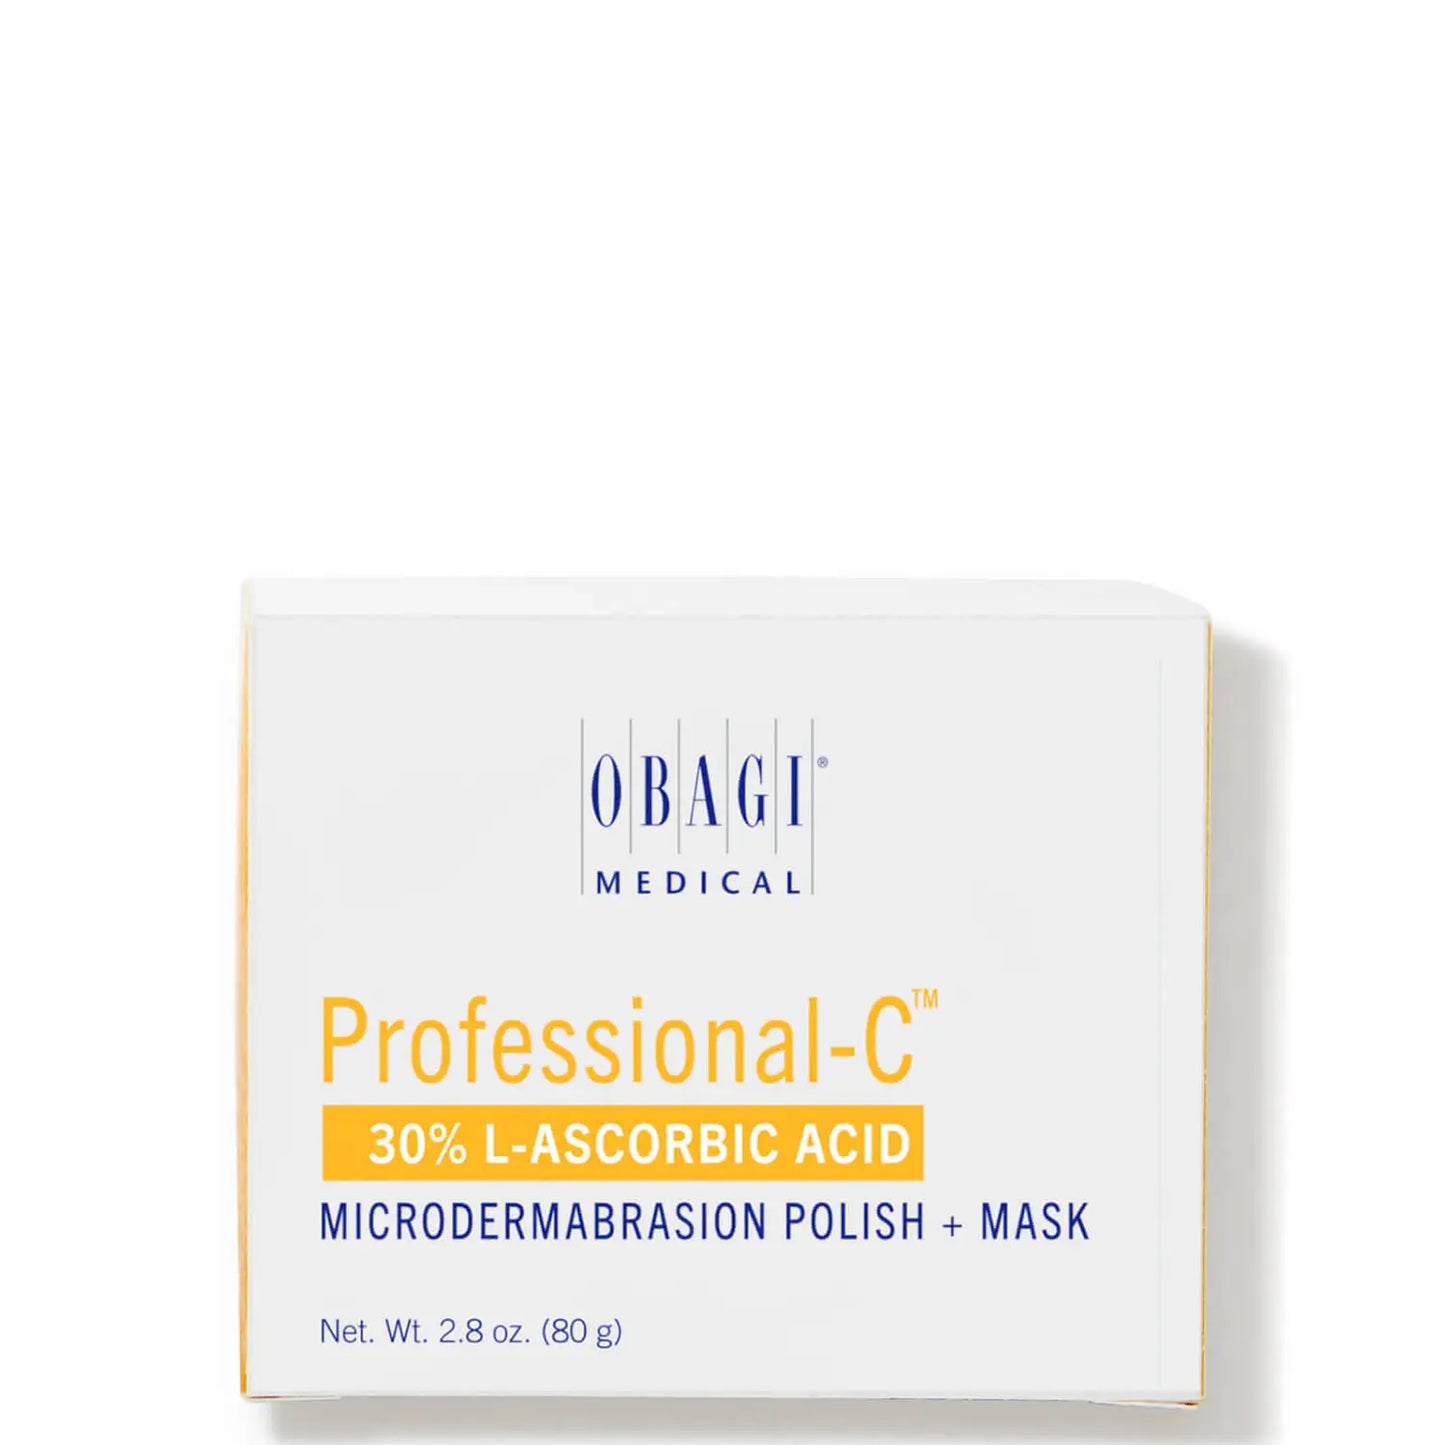 Obagi Medical Professional-C Microdermabrasion Polish Mask